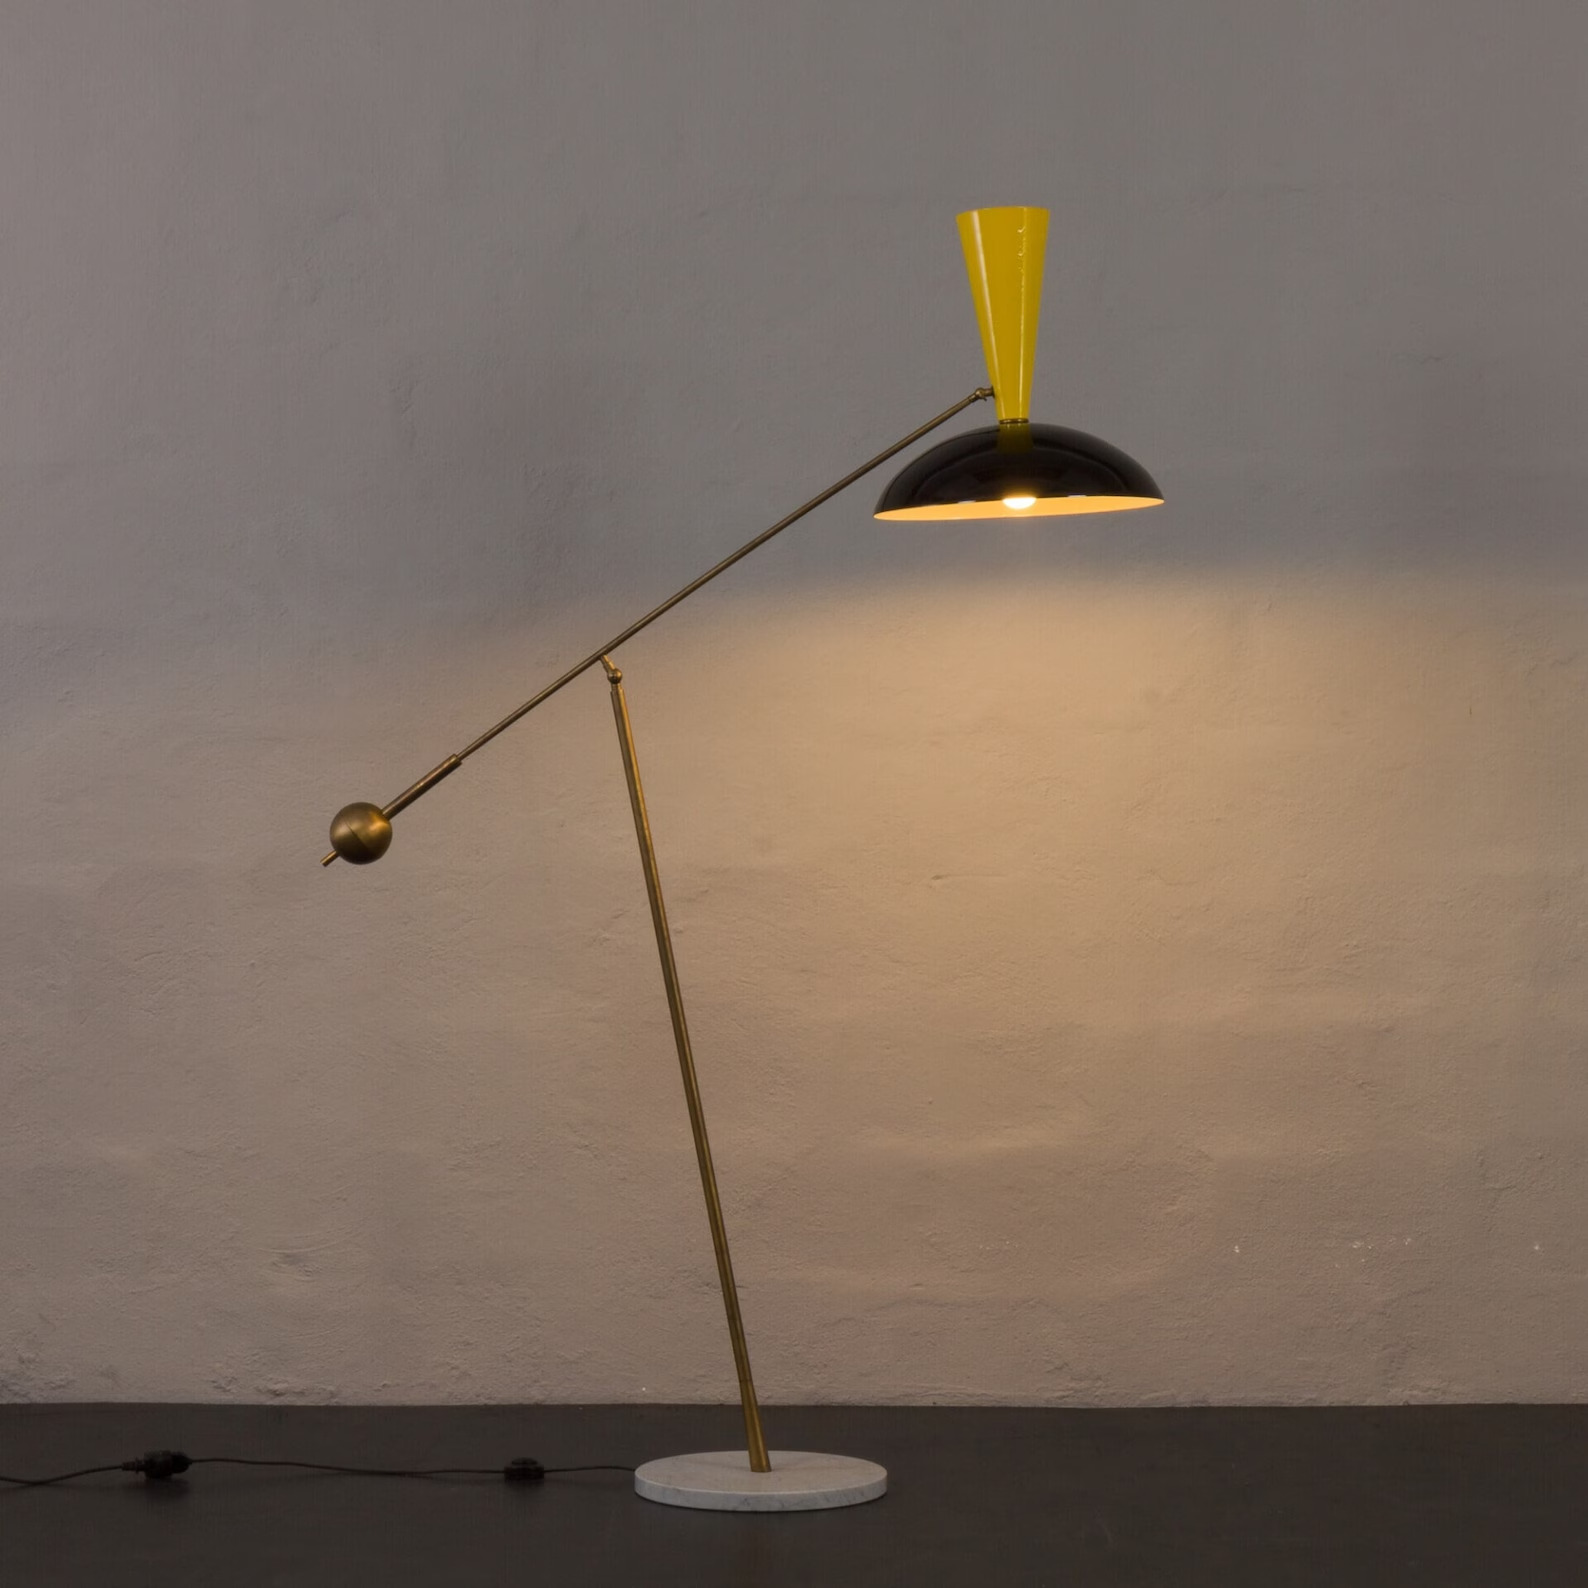 Vintage Mid-Century Modern Floor Lamp - Antique Lighting Fixture with Timeless